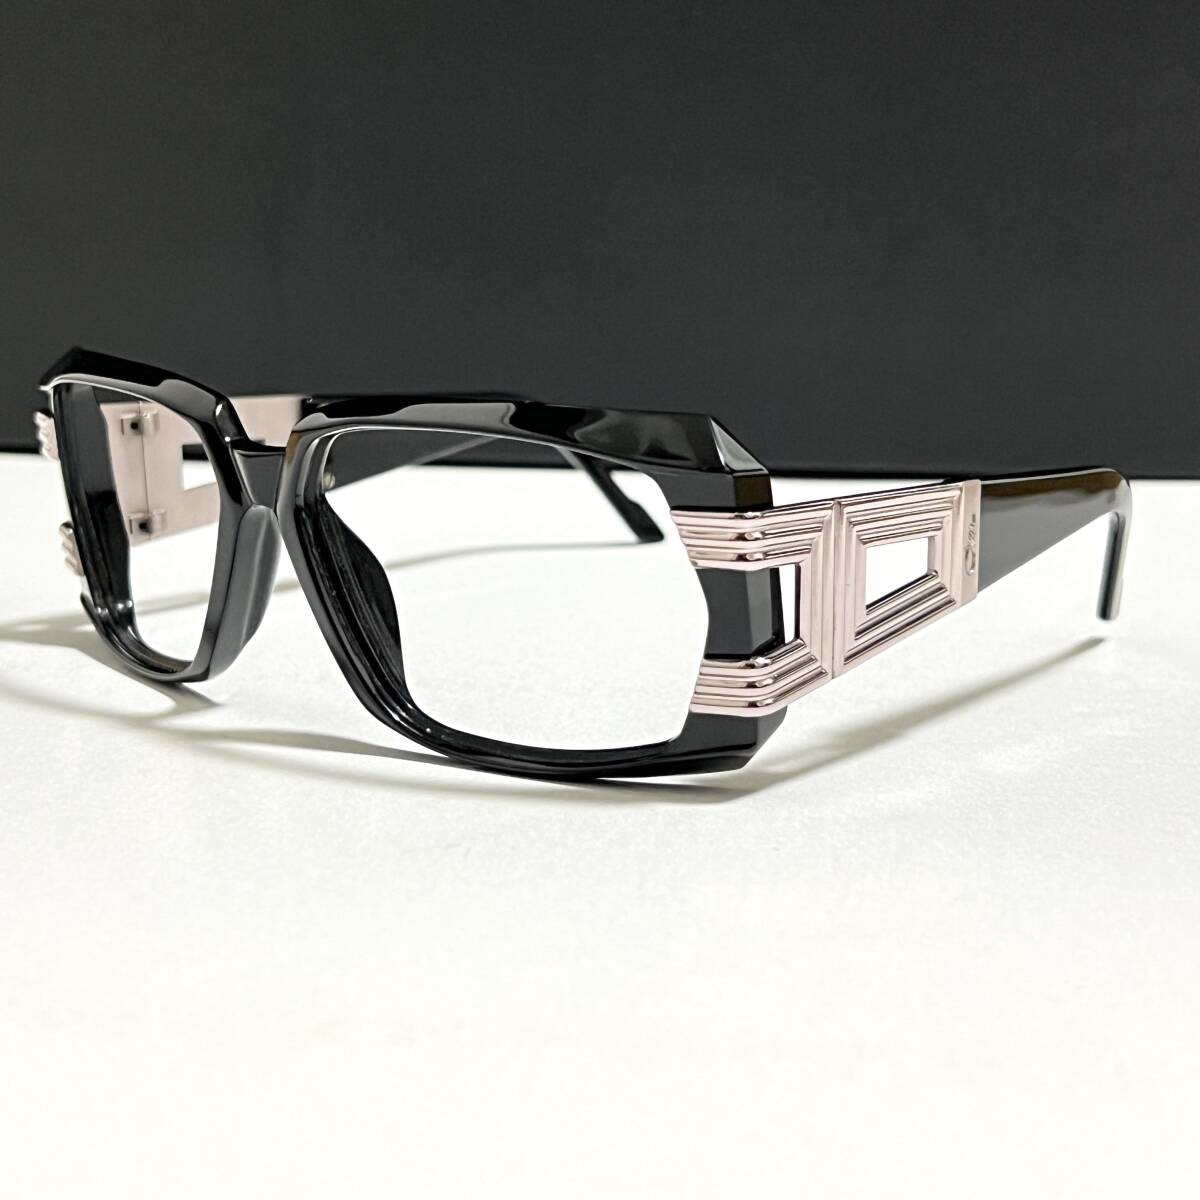 ◆CAZAL カザール 8001 ブラック×シルバー レジェンズ レンズ交換要 眼鏡フレーム メガネ サングラス